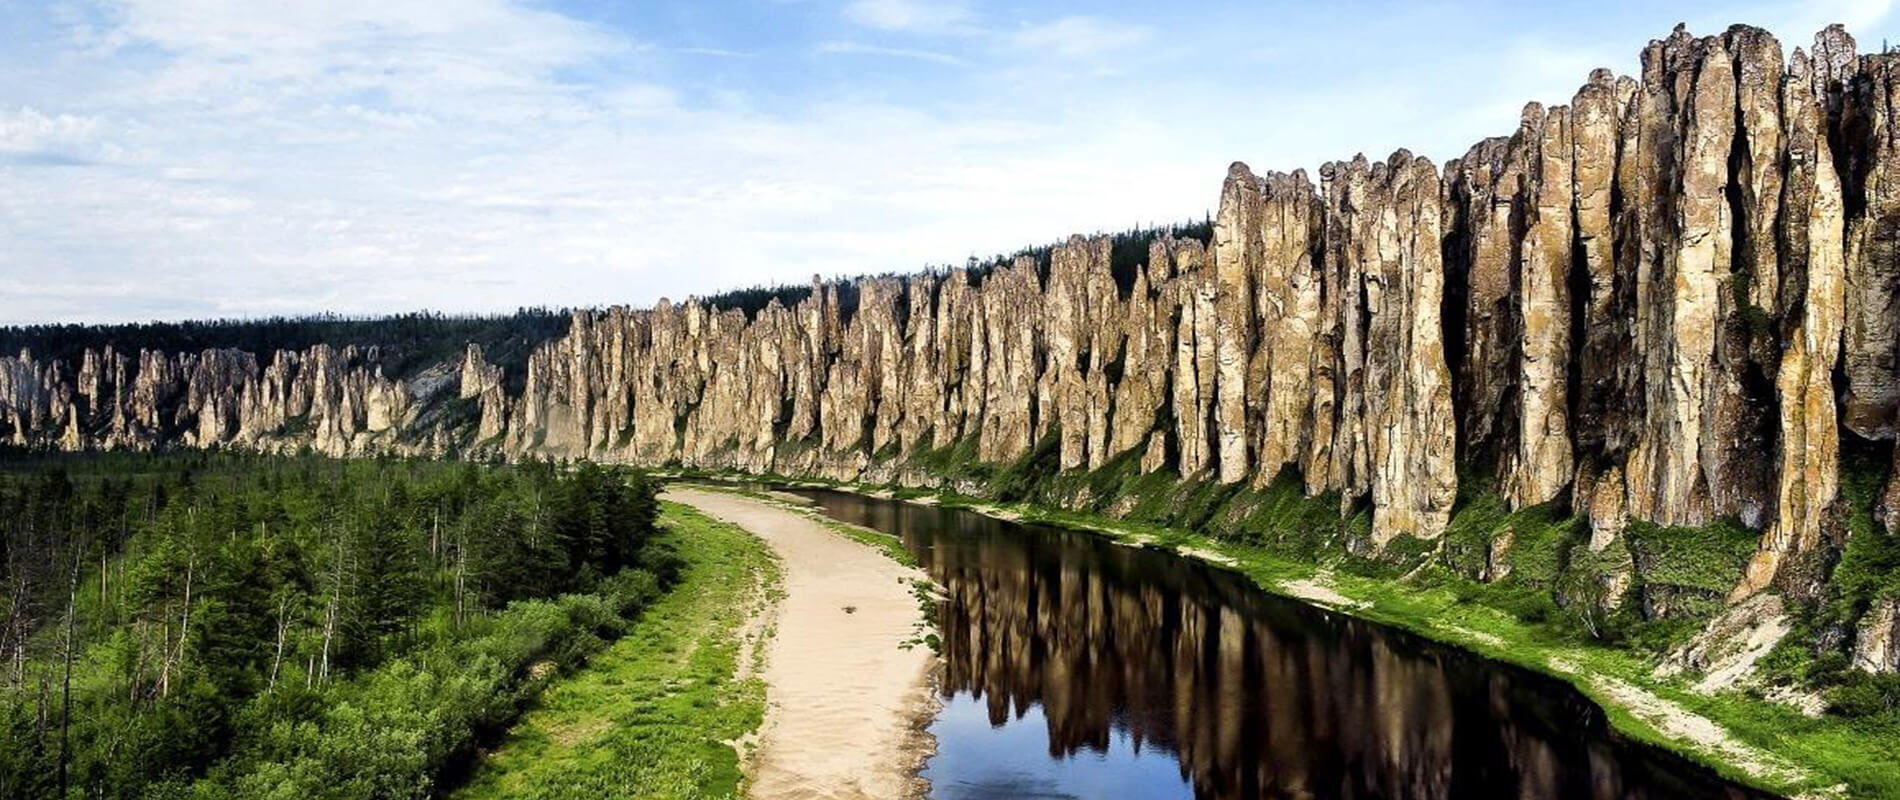 ленские столбы река лена